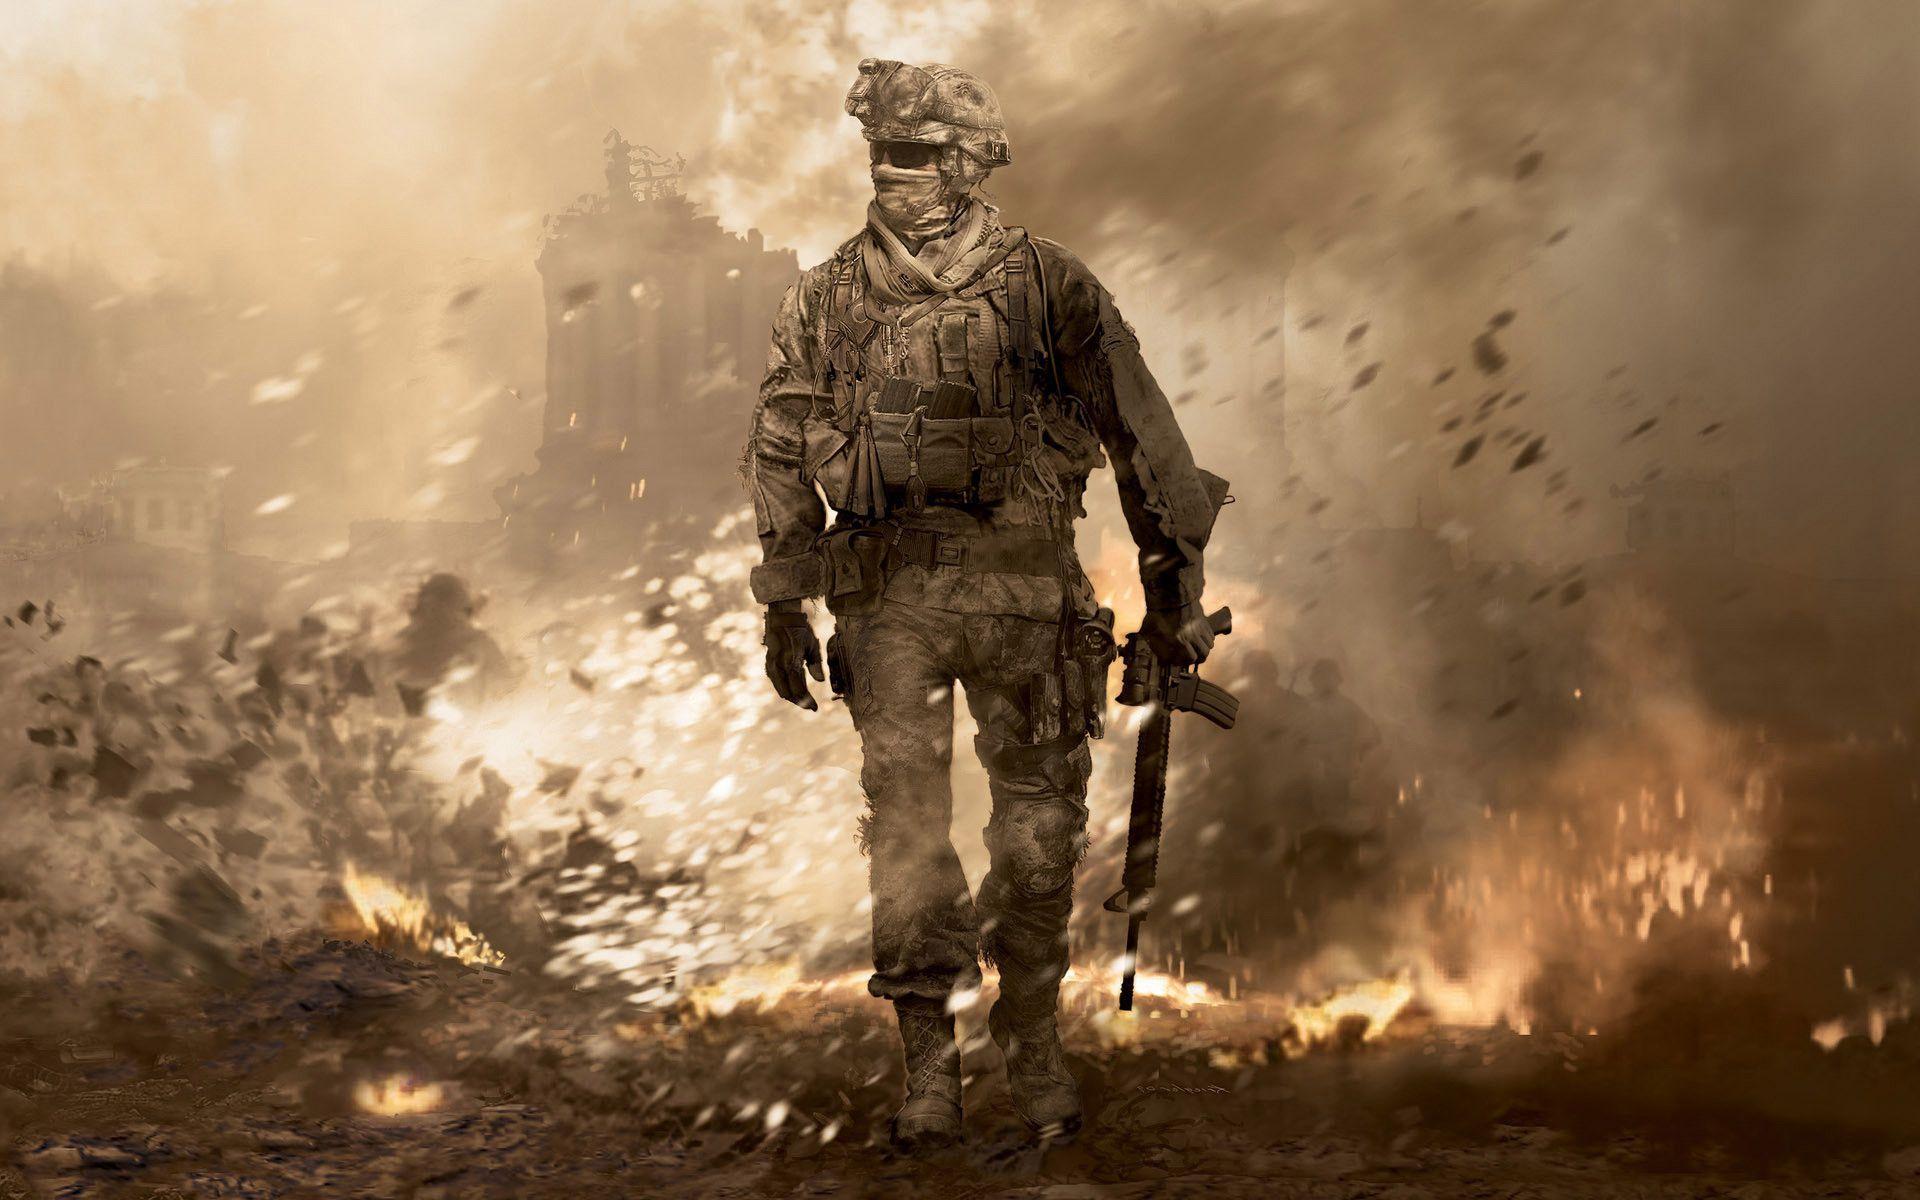 50+] Call Of Duty: Modern Warfare 2 HD Wallpapers - WallpaperSafari